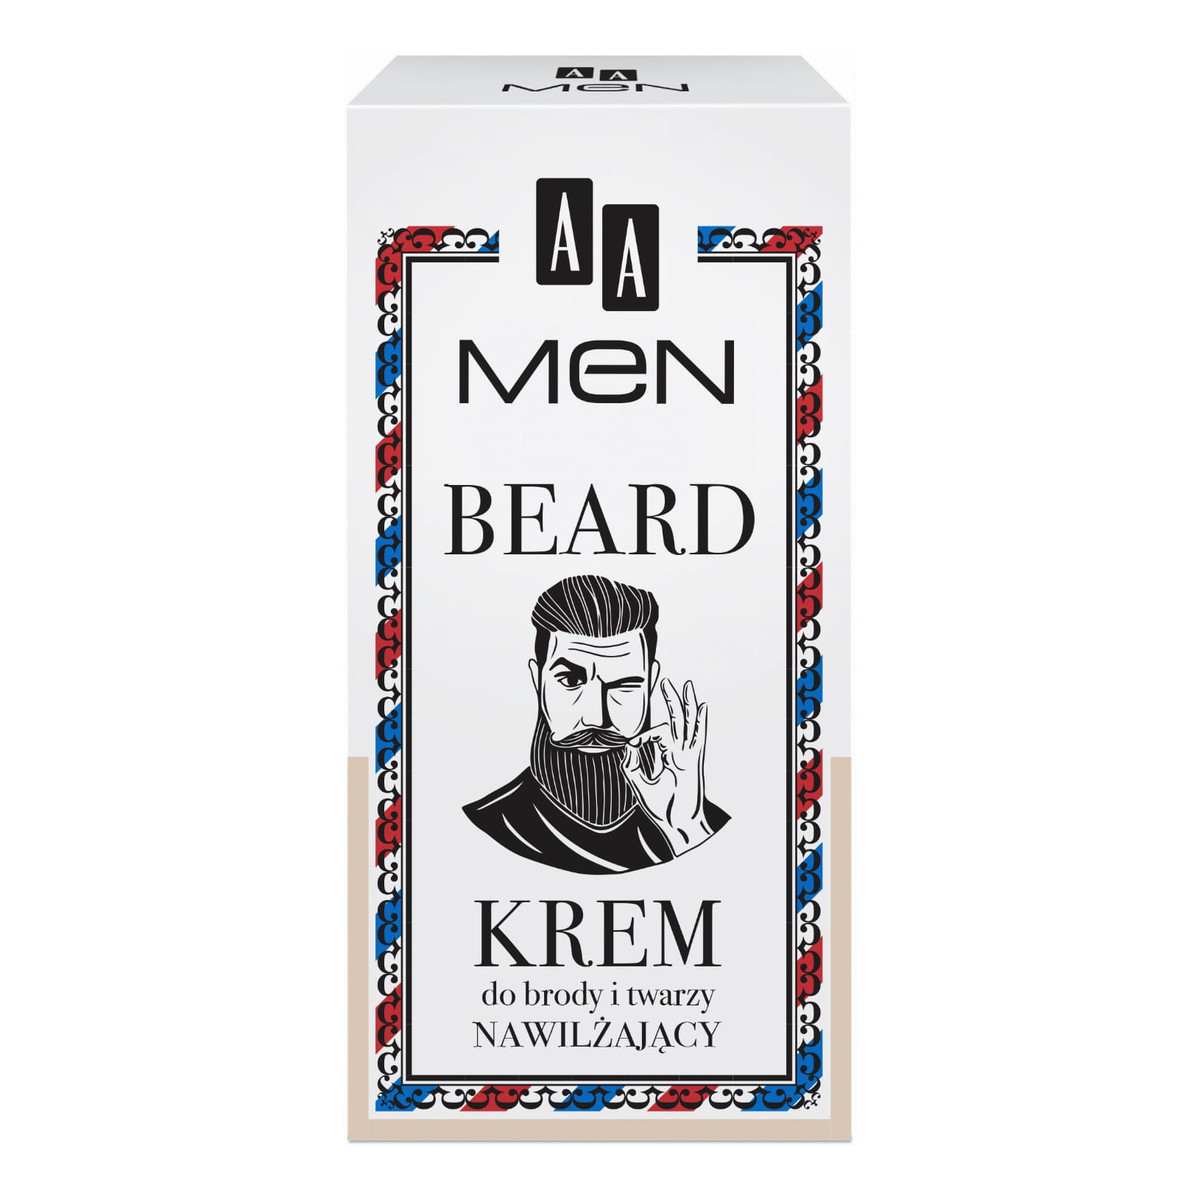 AA Men Beard Krem do brody i twarzy 50ml